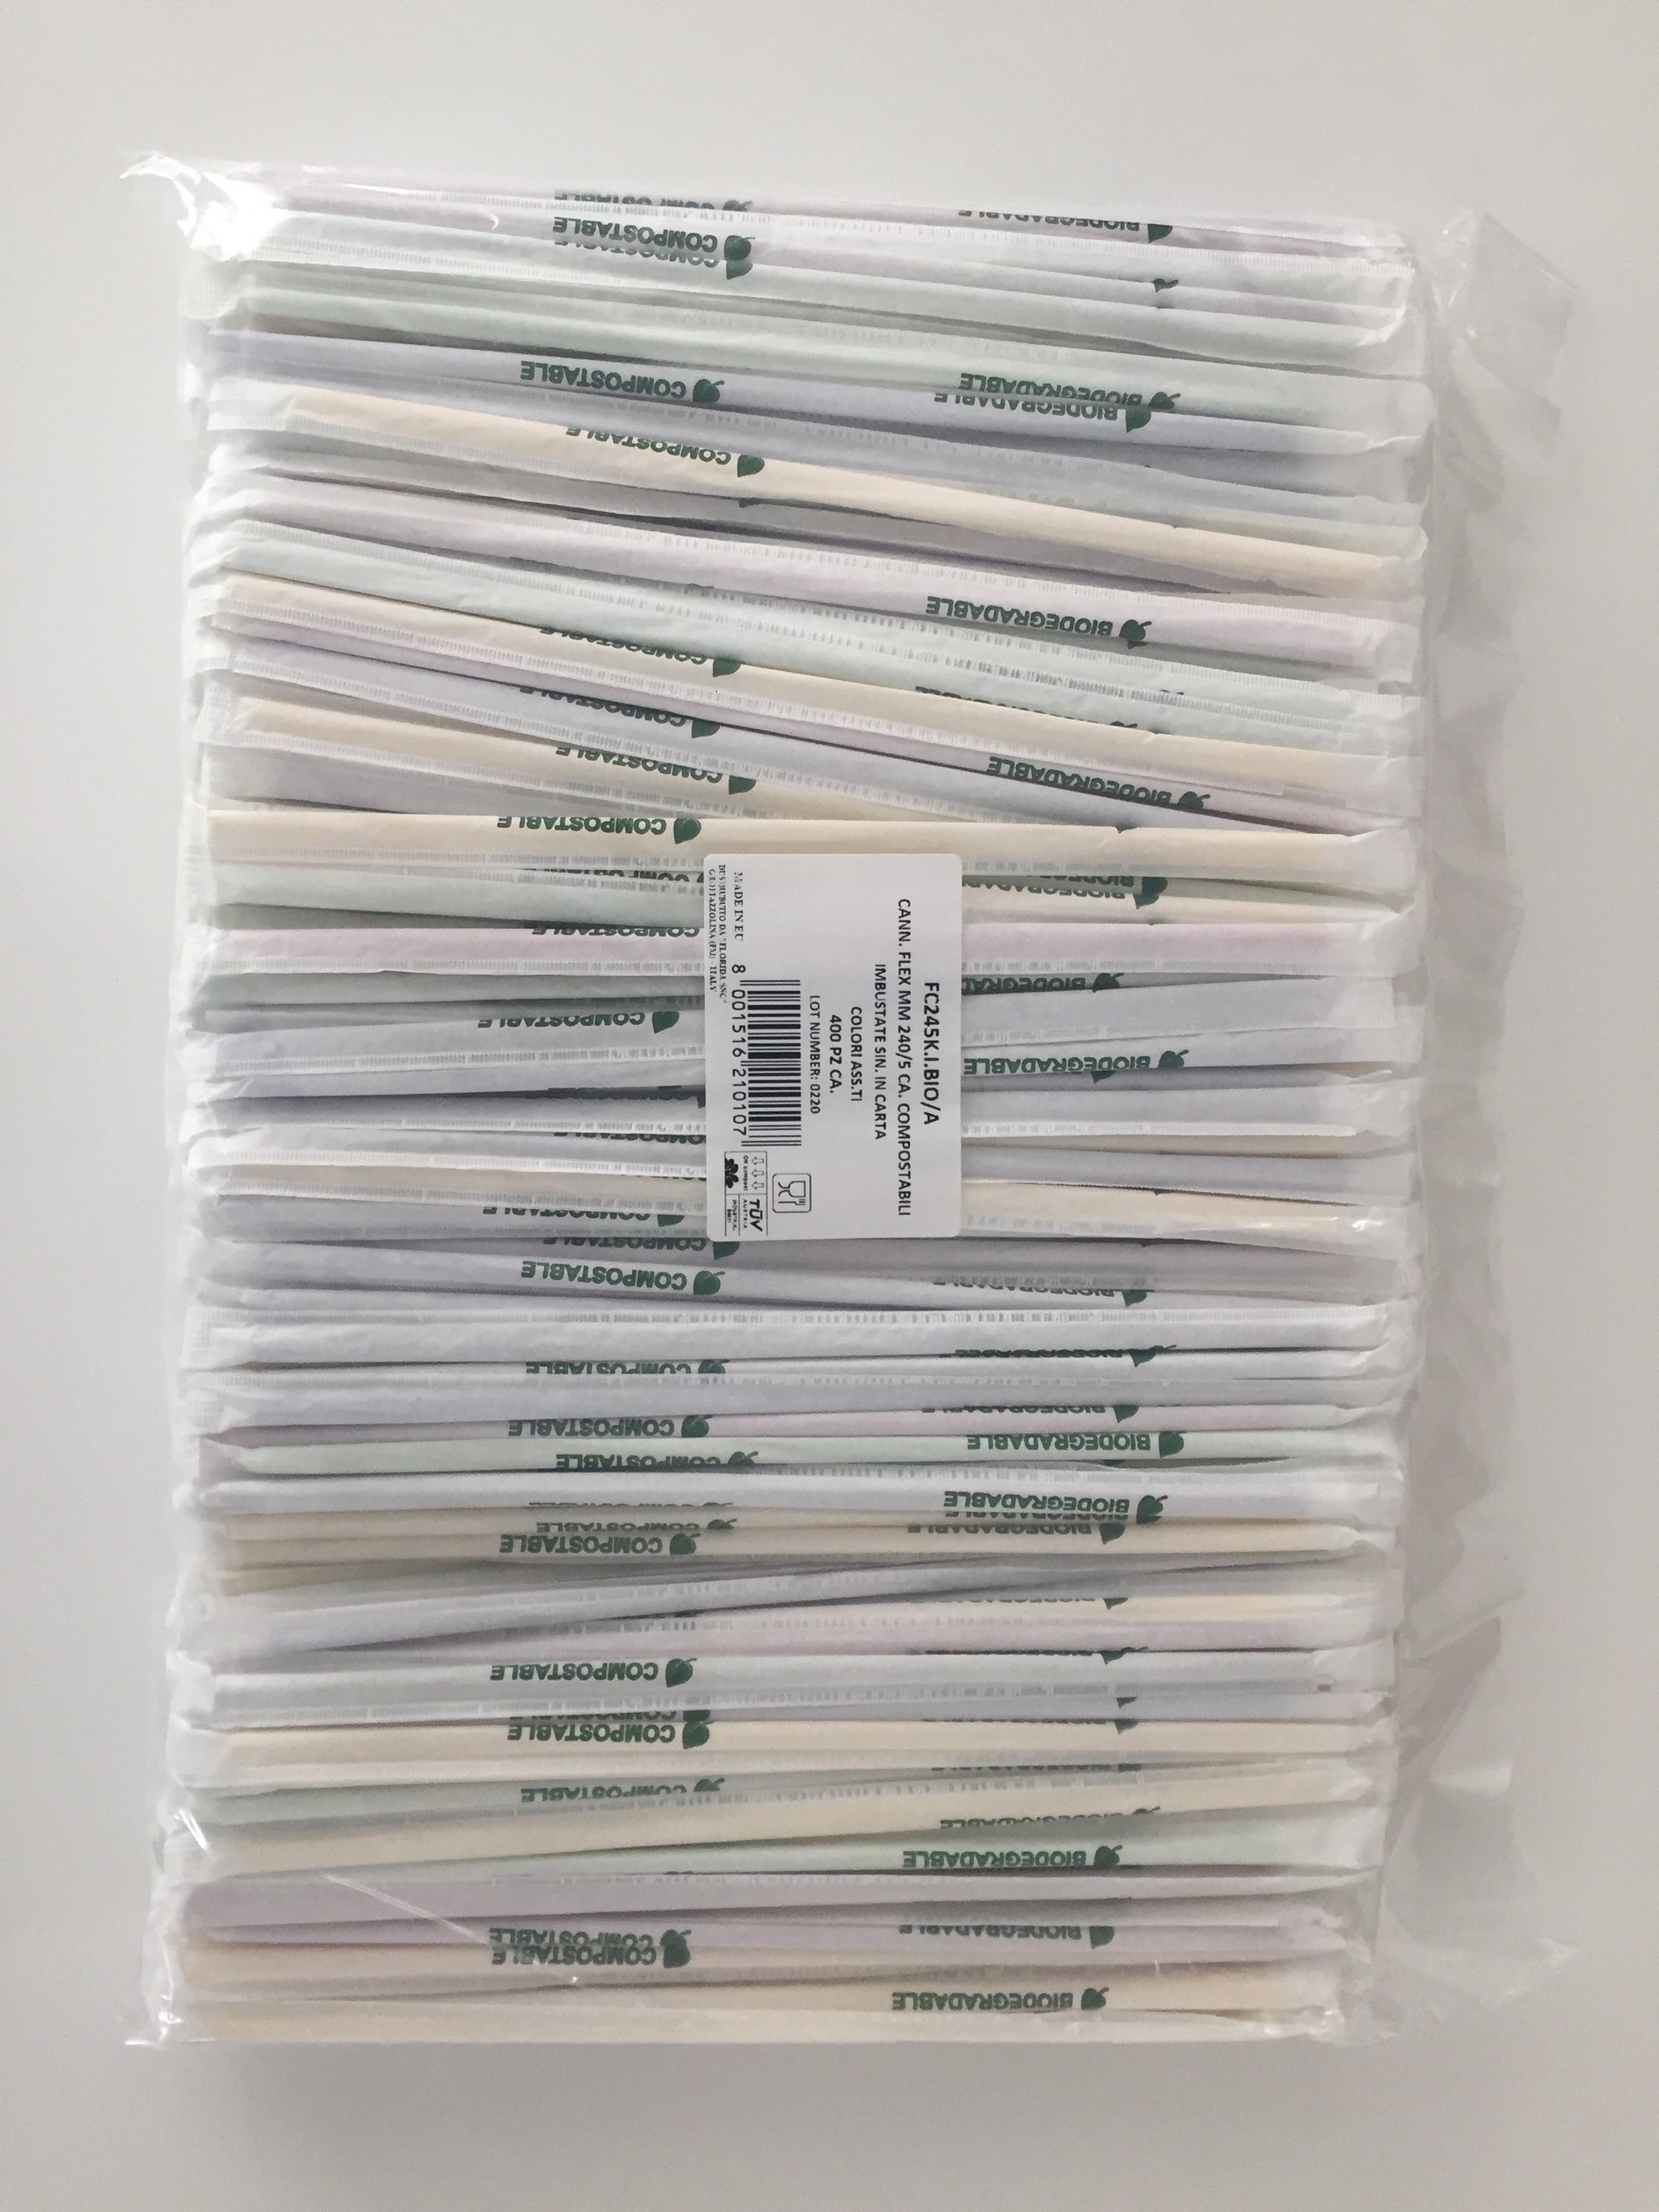 Biodegradable Bagged Flex Paper Straws (multicolored) 400 units